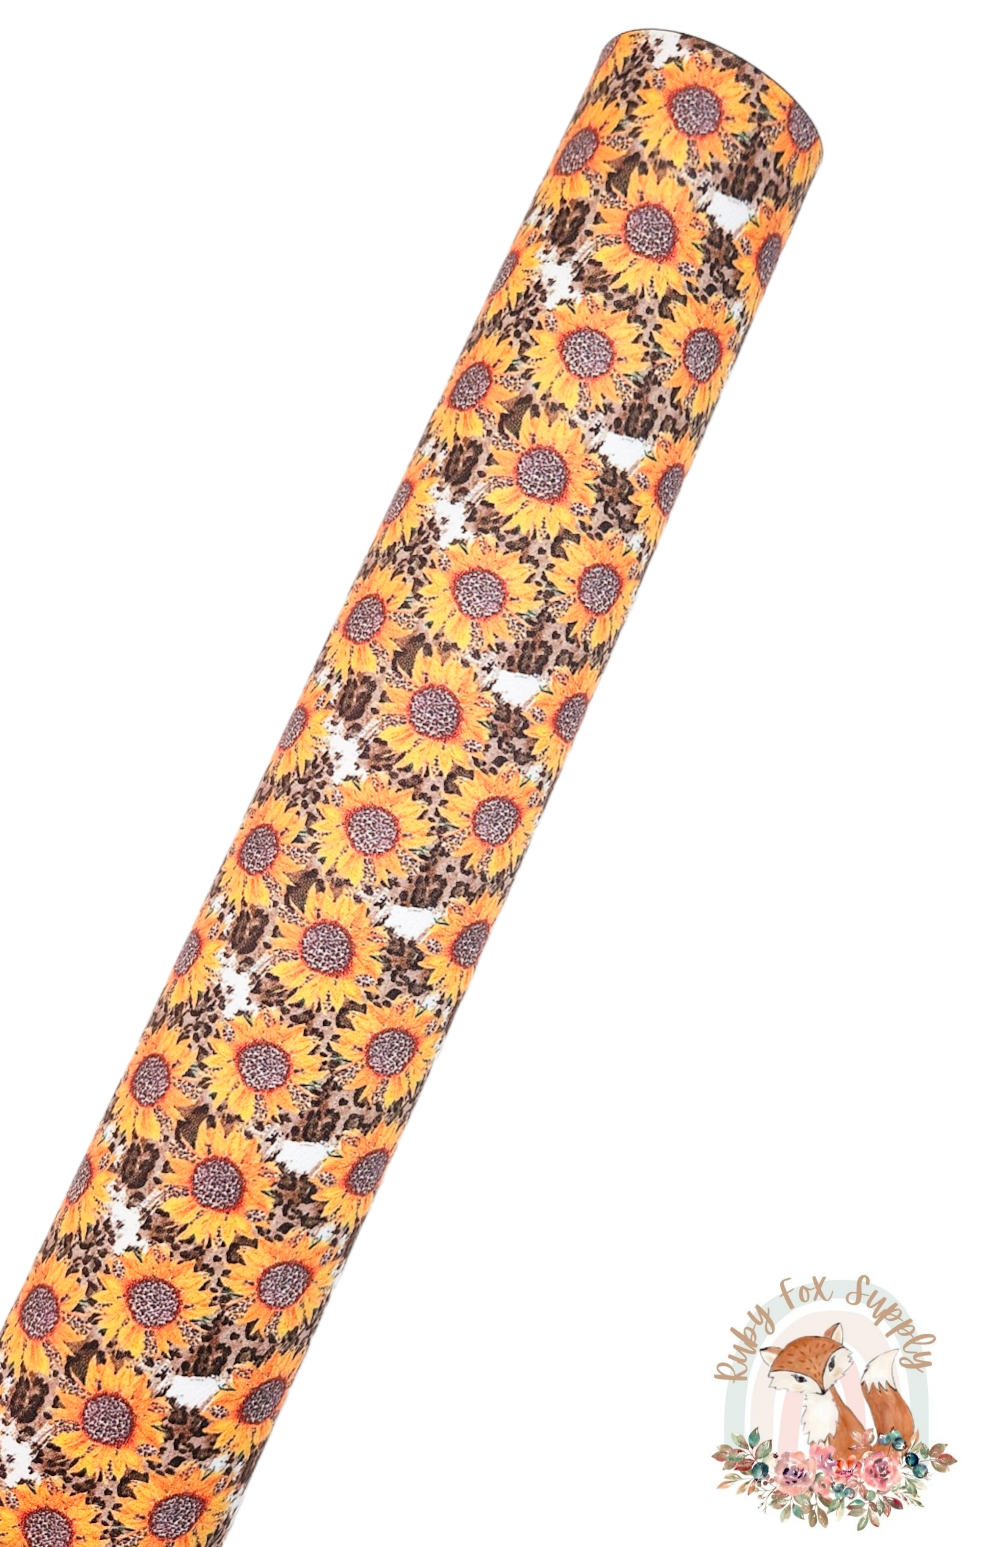 Sunflower Cheetah Print Brushstrokes 9x12 faux leather sheet